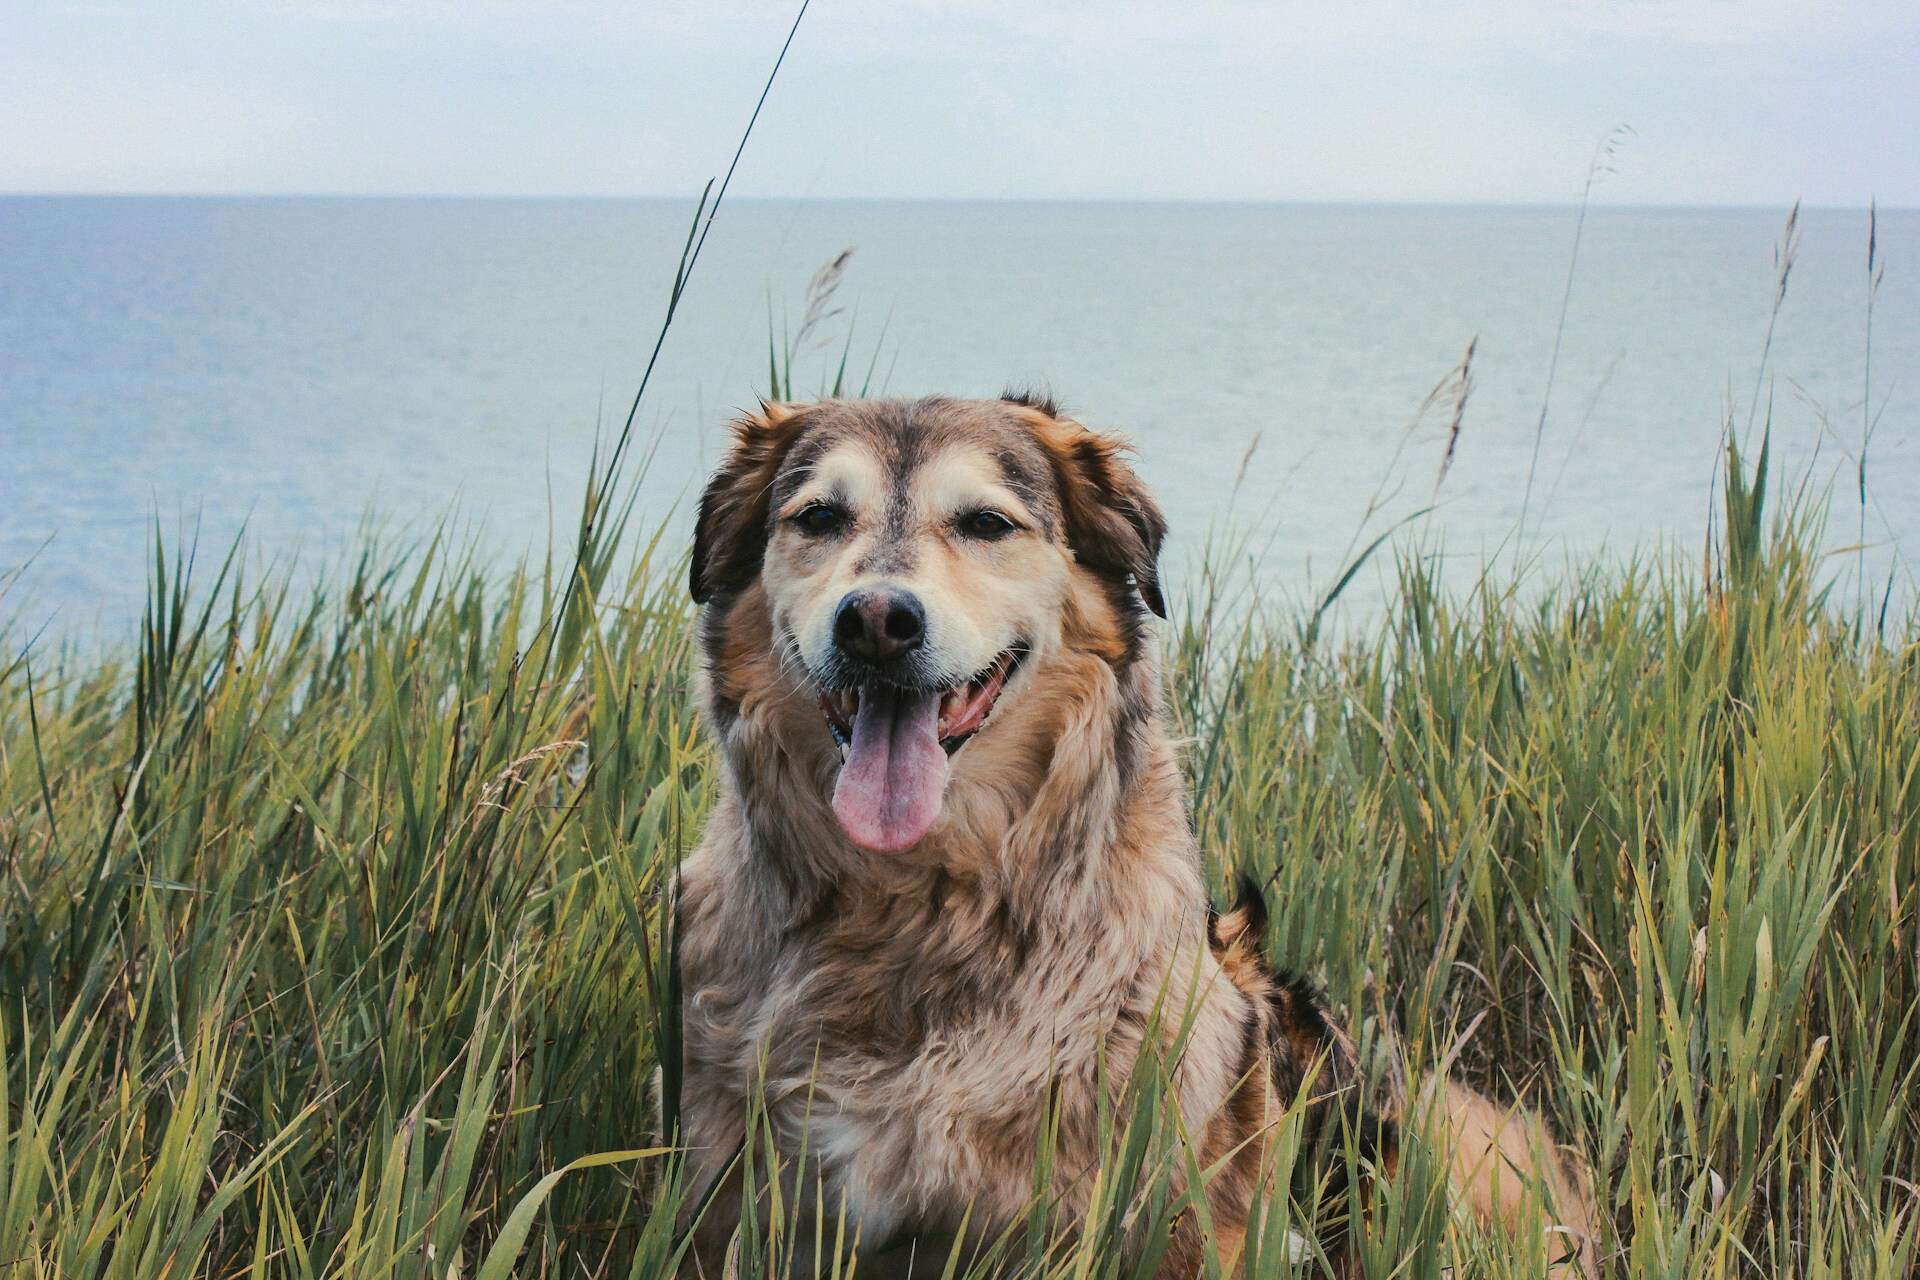 A big dog sitting in a grassy field by the sea